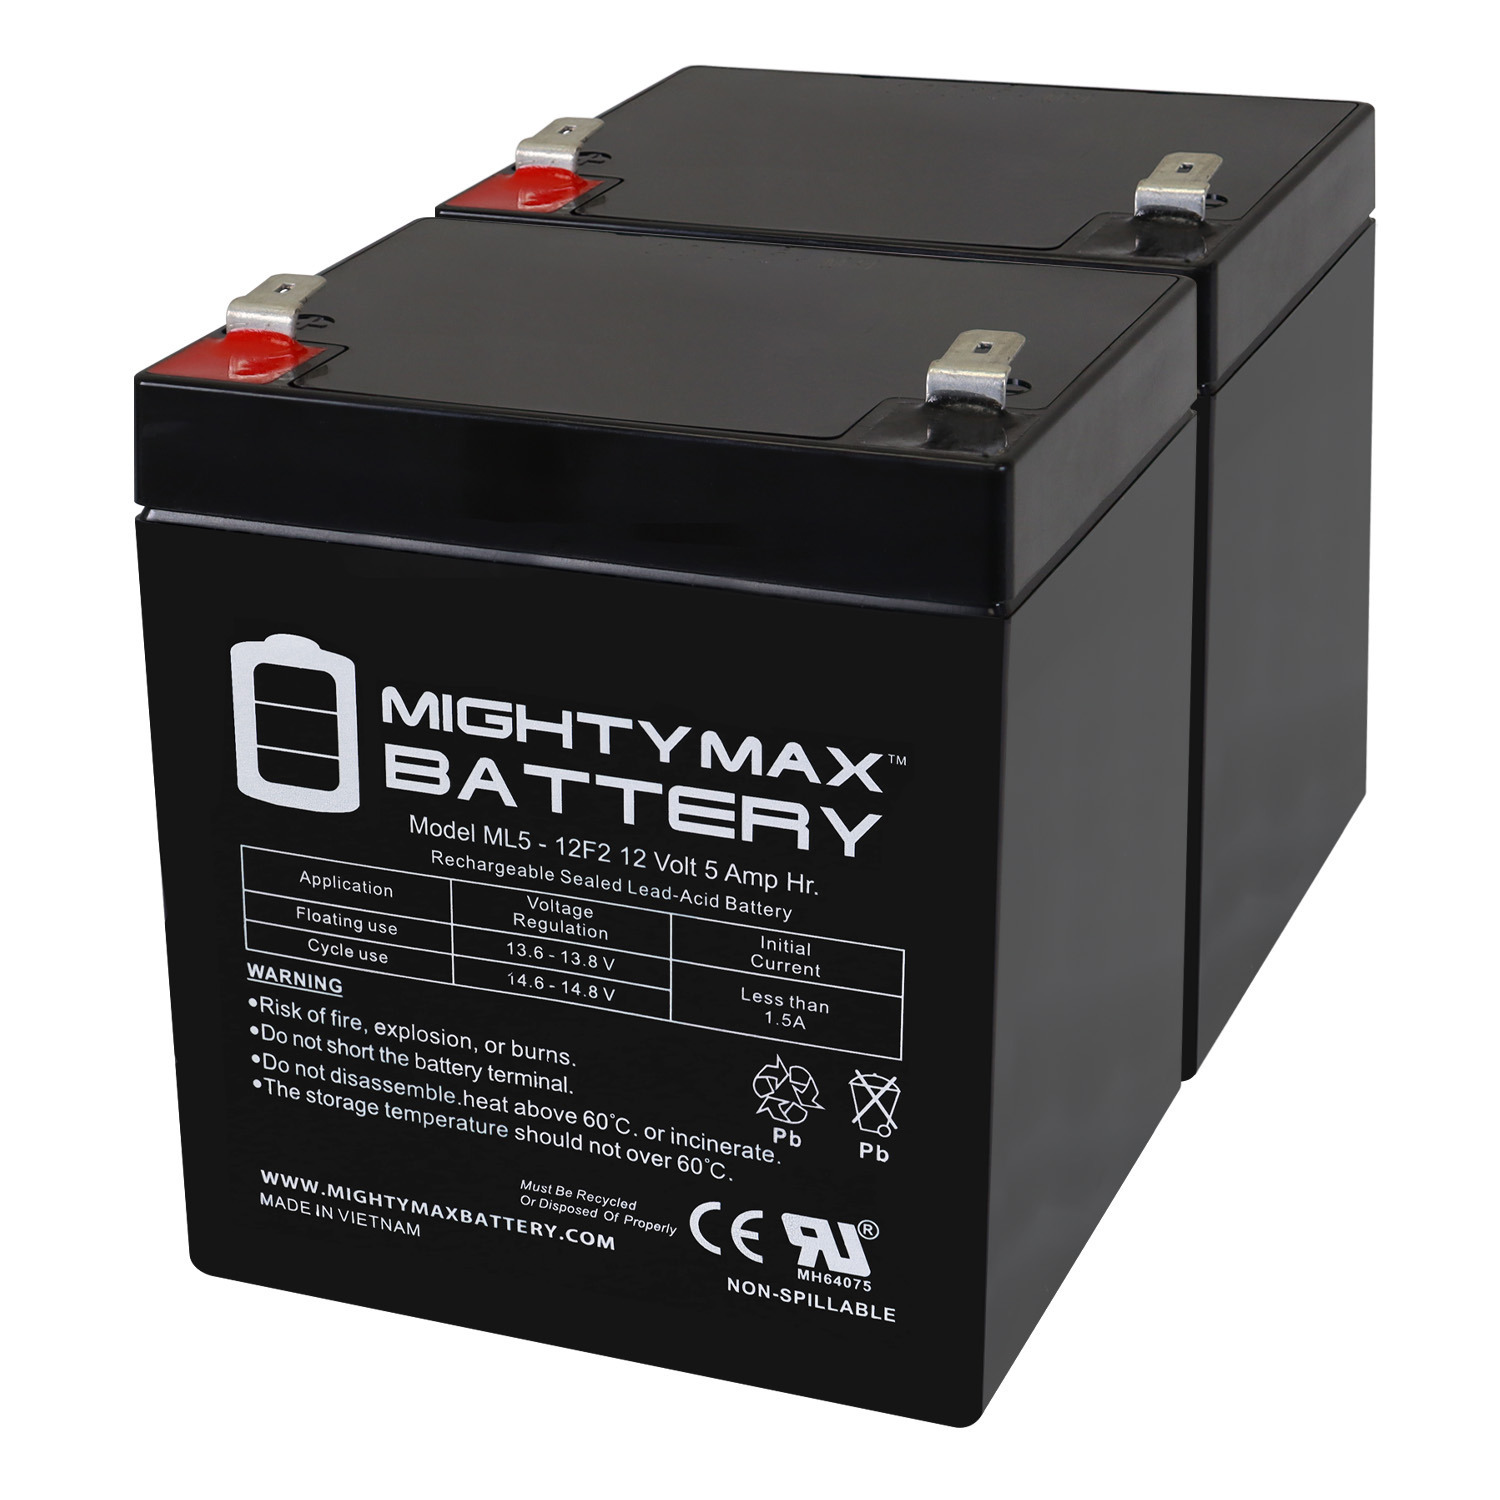 12V 5Ah F2 SLA Replacement Battery for Drift Crazy Cart - 25143499 - 2 Pack